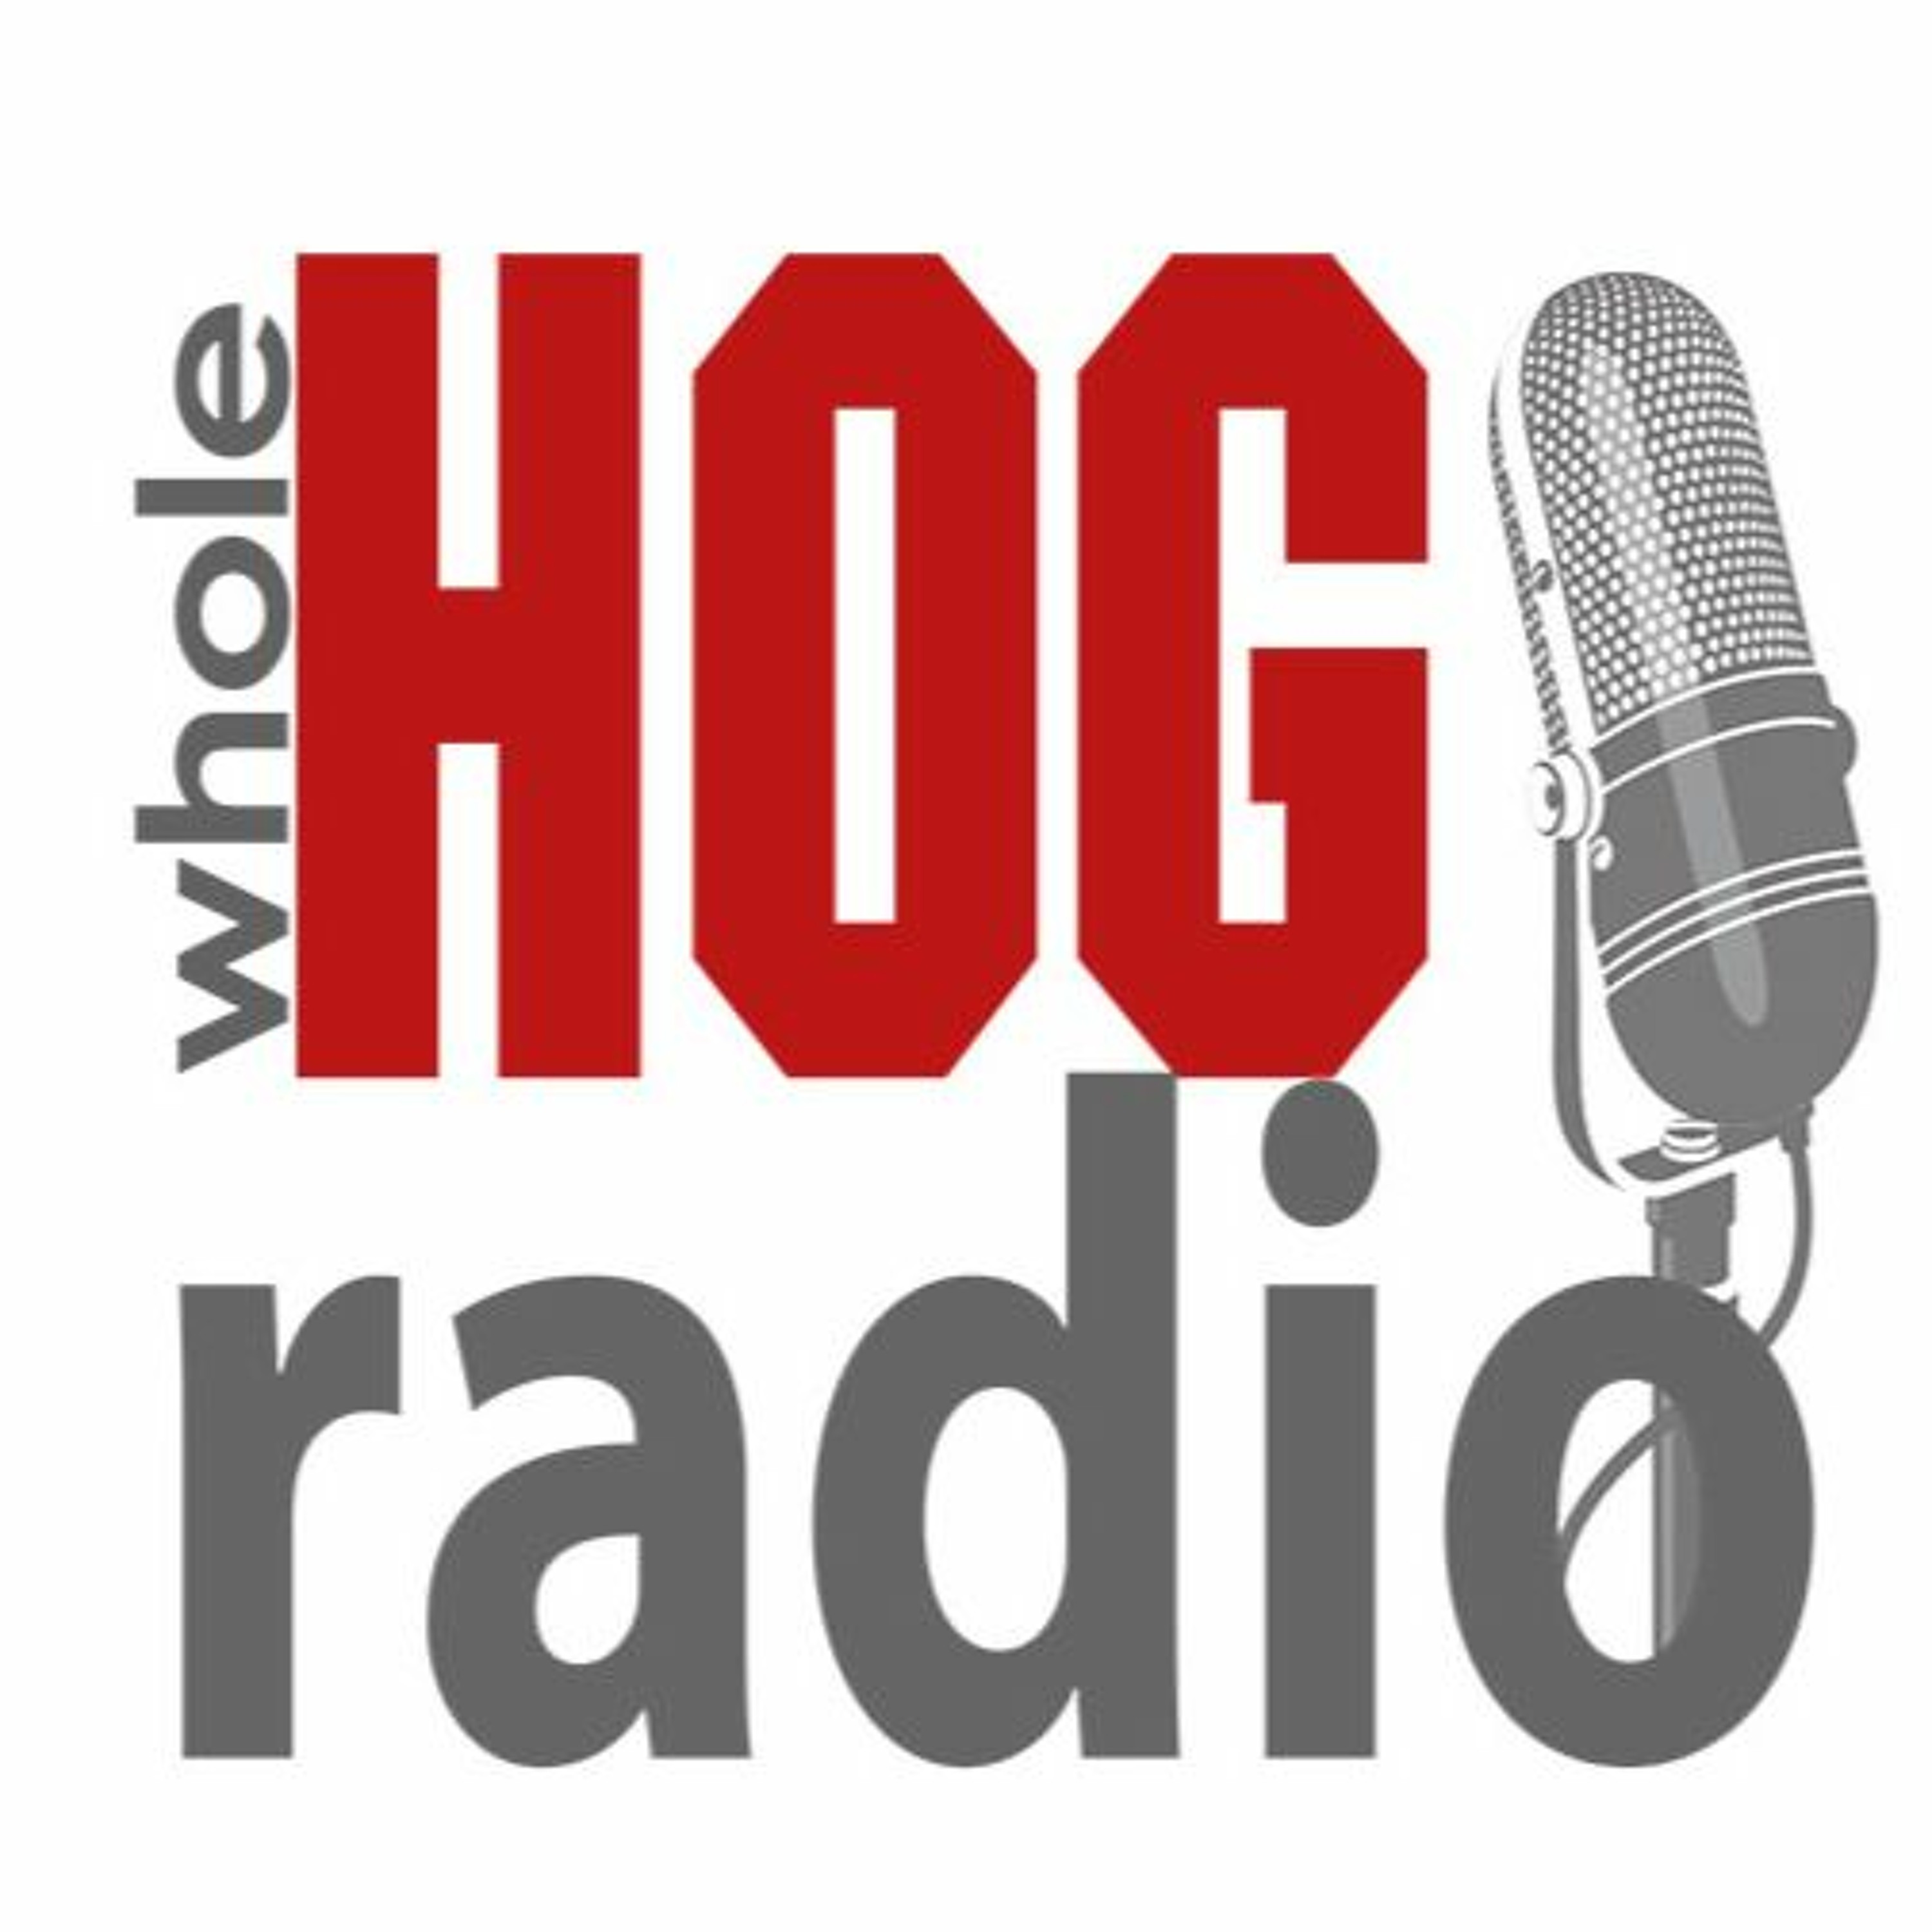 WholeHog Podcast: Recent hirings heat up Battle Line rivalry